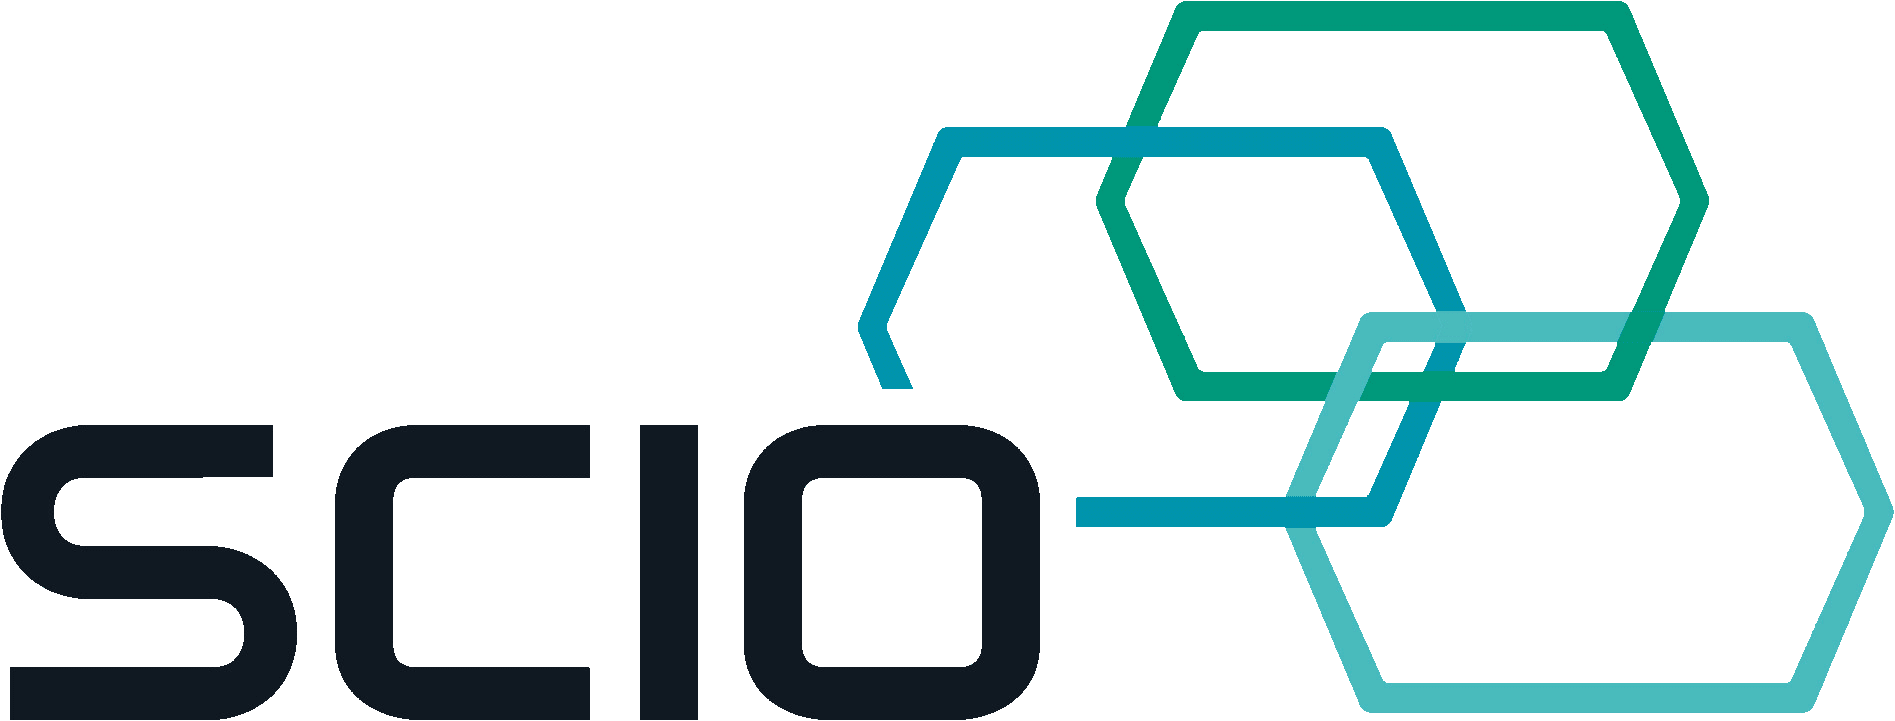 SCIO Technology GmbH logo